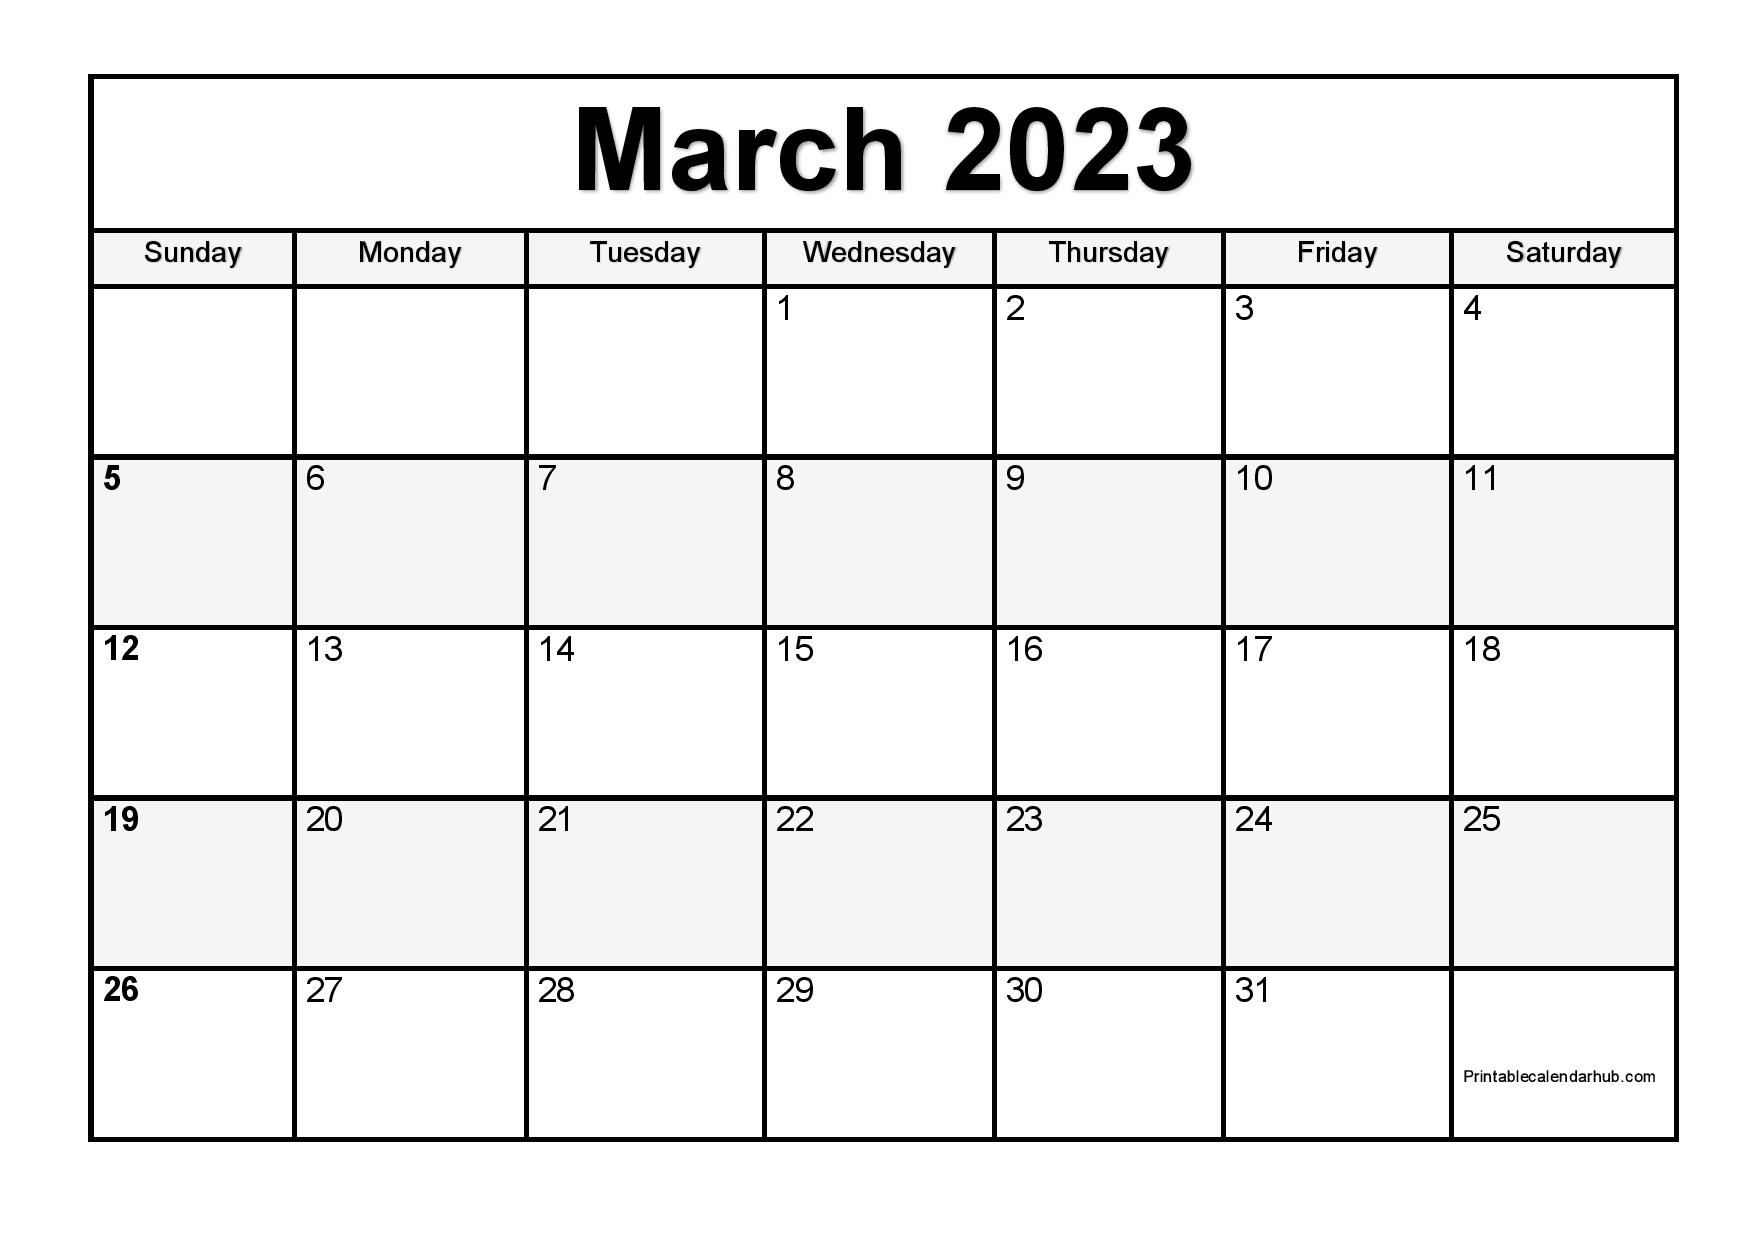 2023-word-calendar-monthly-templates-january-to-december-printable-calendar-hub